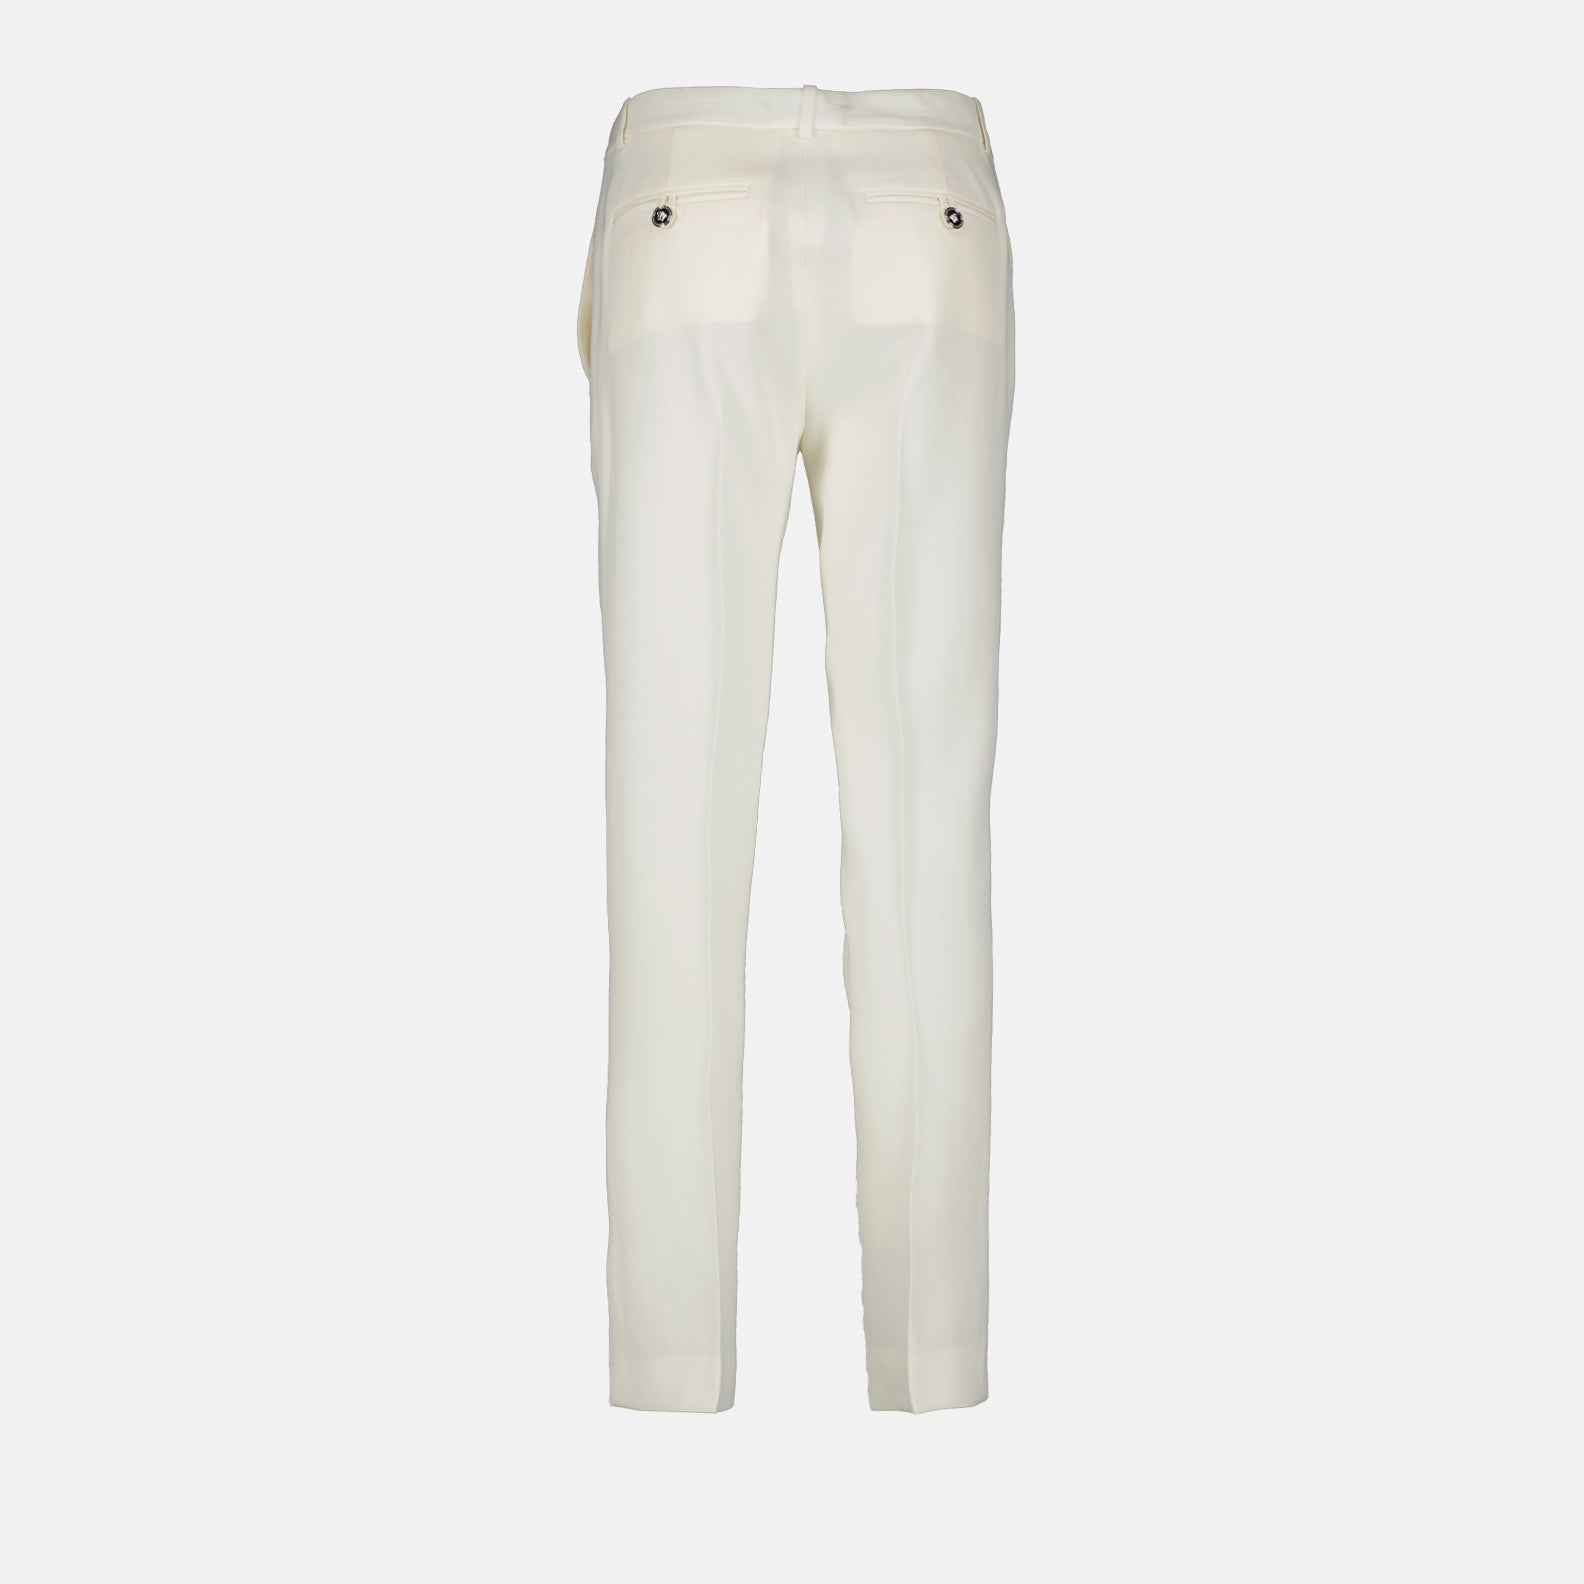 White straight pants